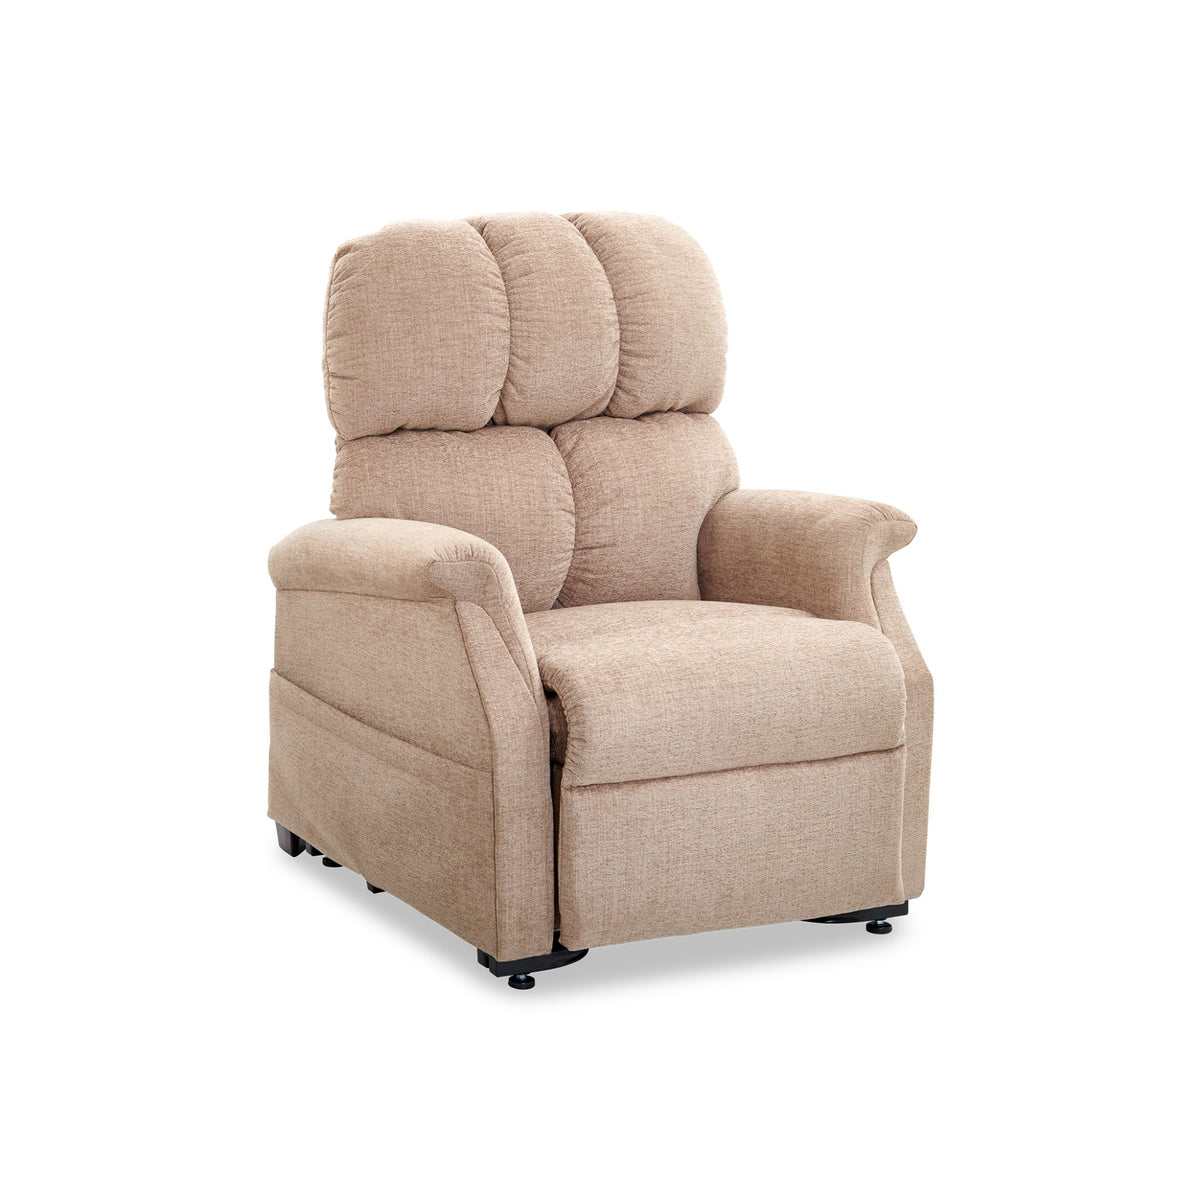 UltraComfort Junior Petite Lift Chair Recliner